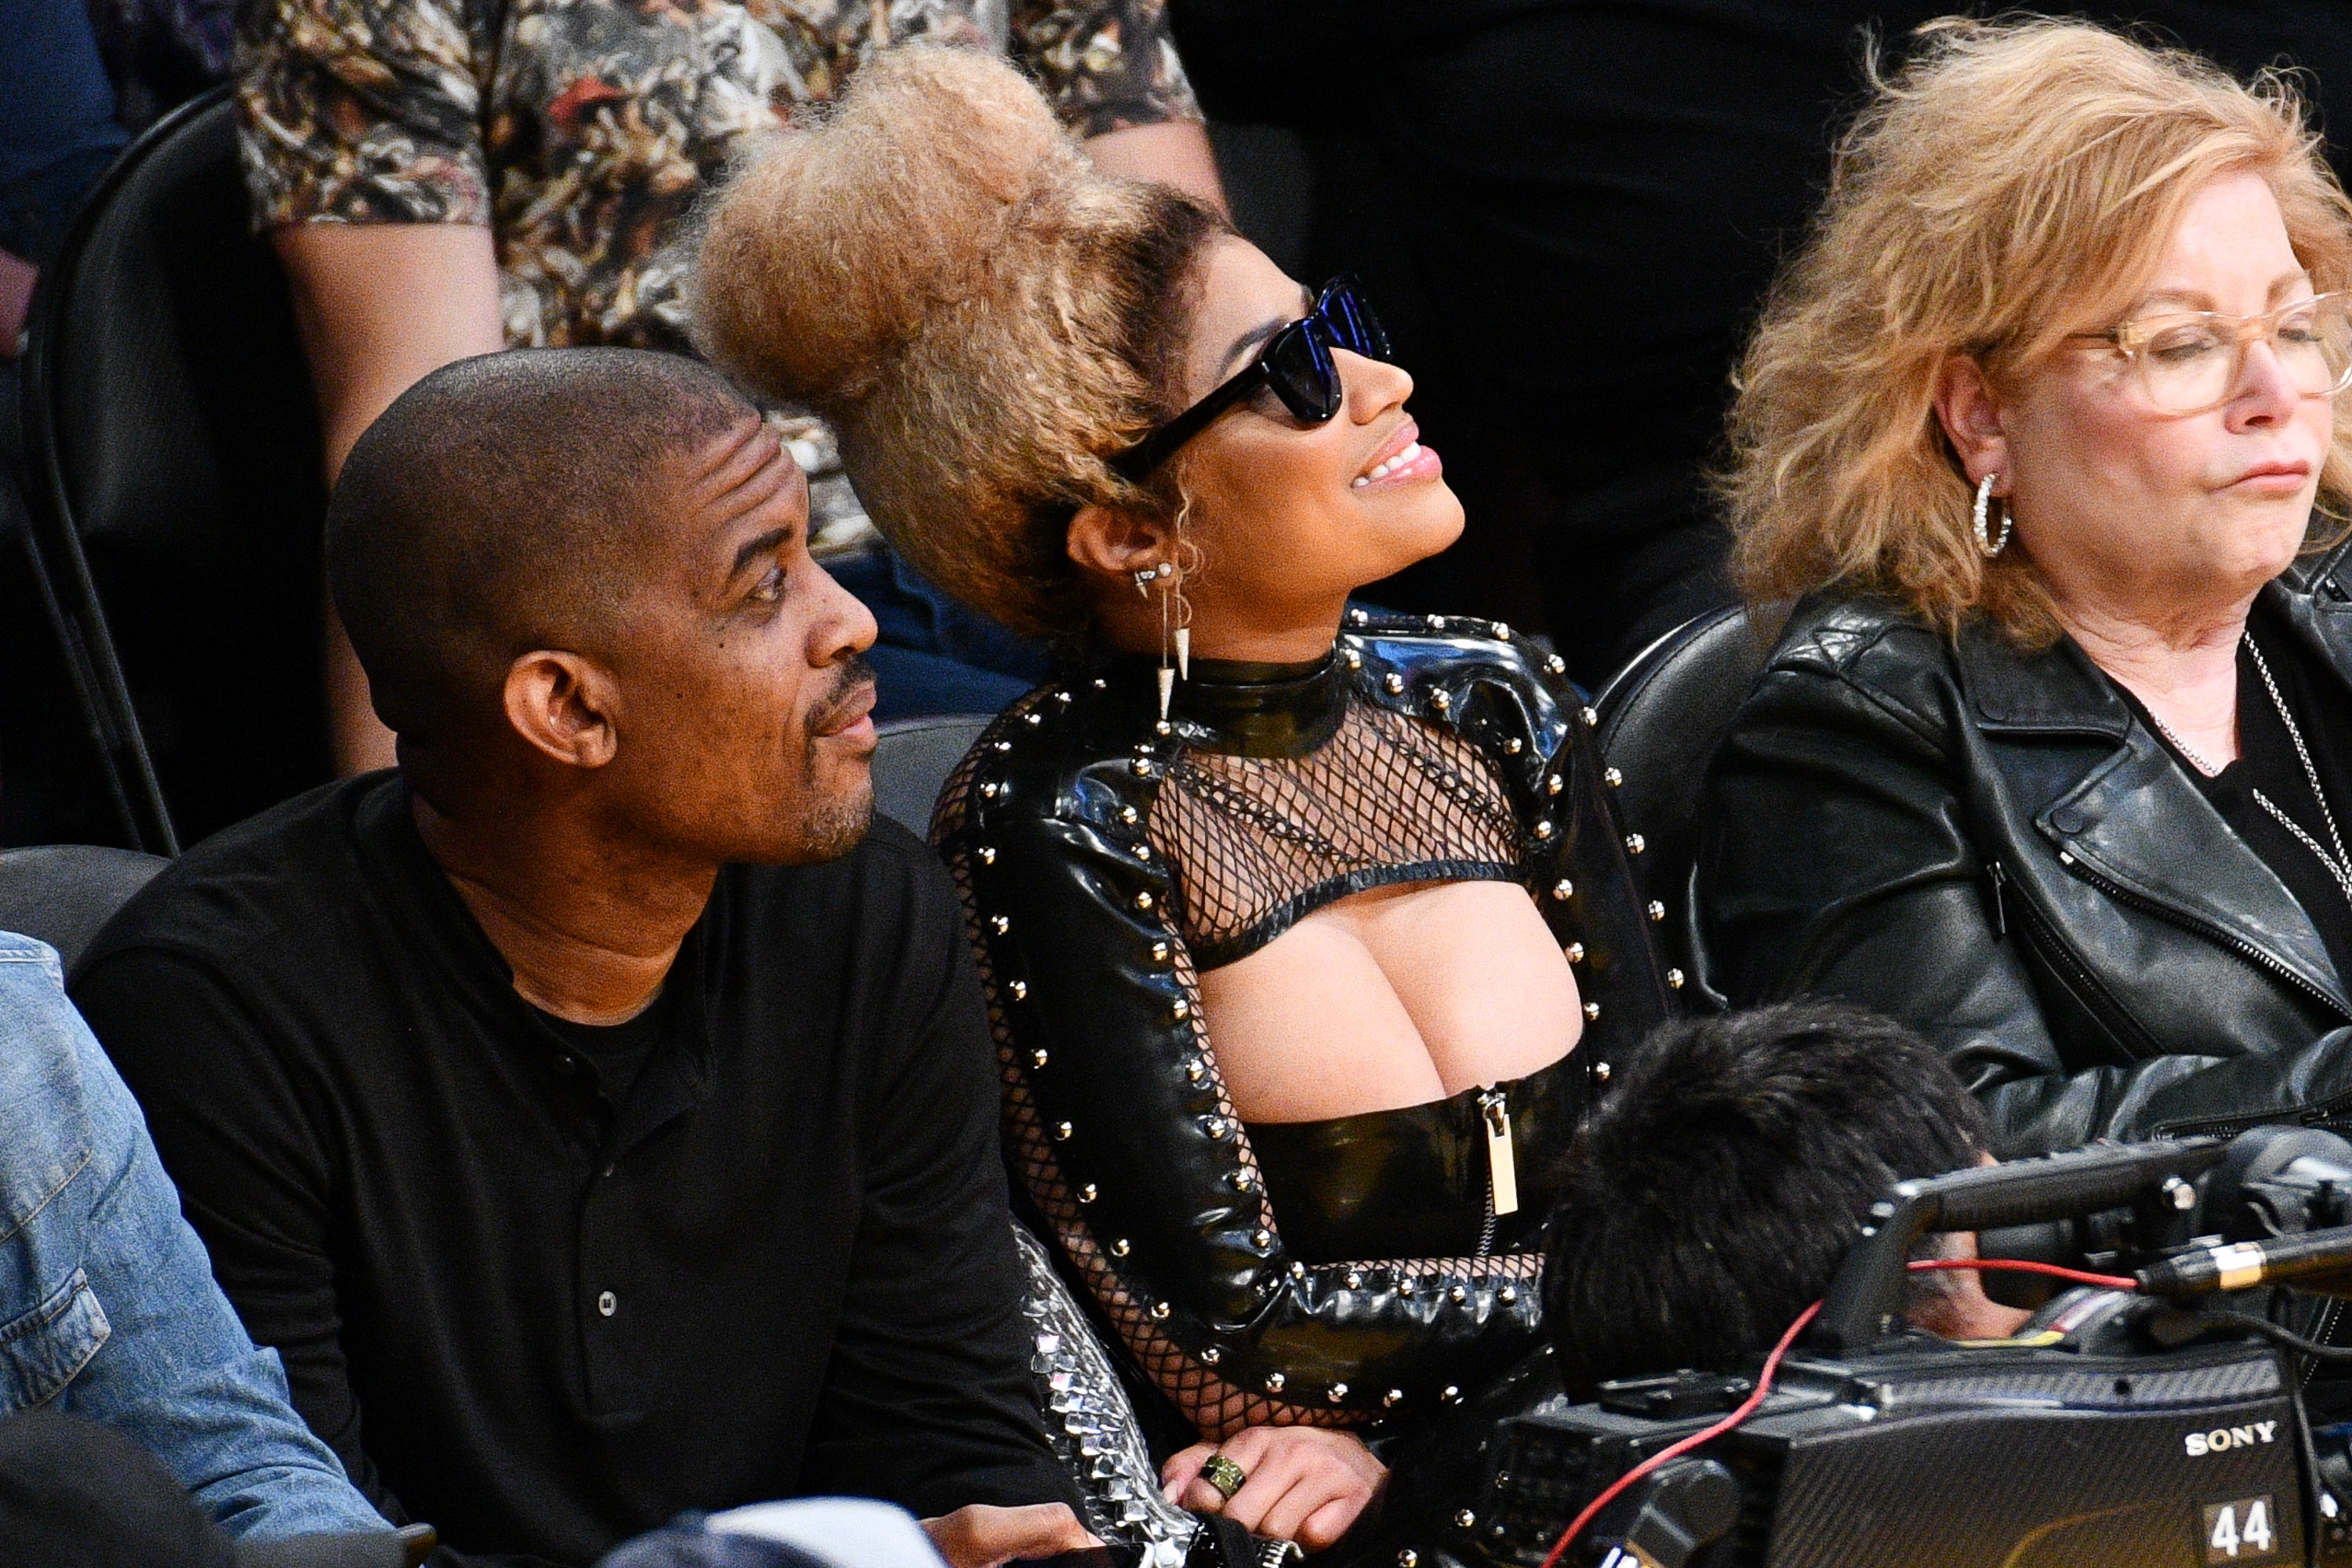 Nicki Minaj beats Beyoncé for craziest courtside look at NBA game